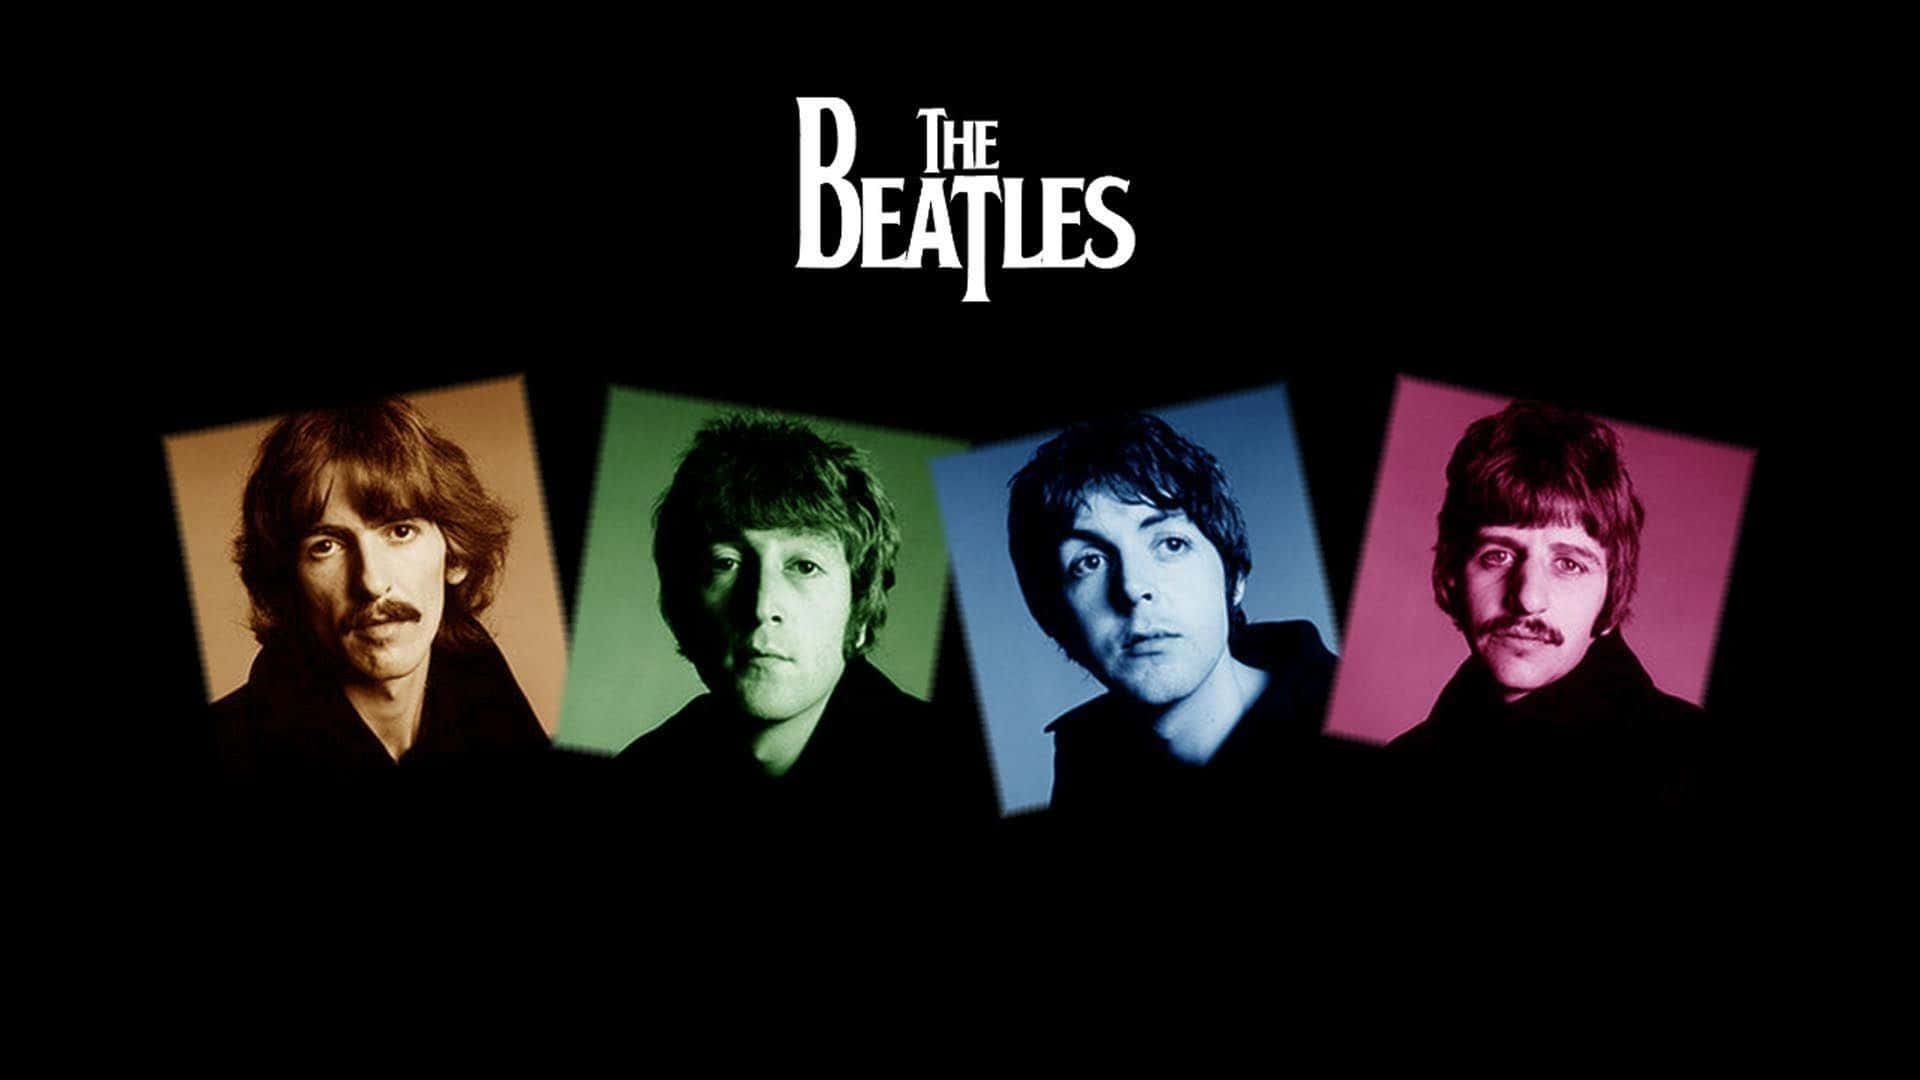 The Beatles – Legendary Music Group